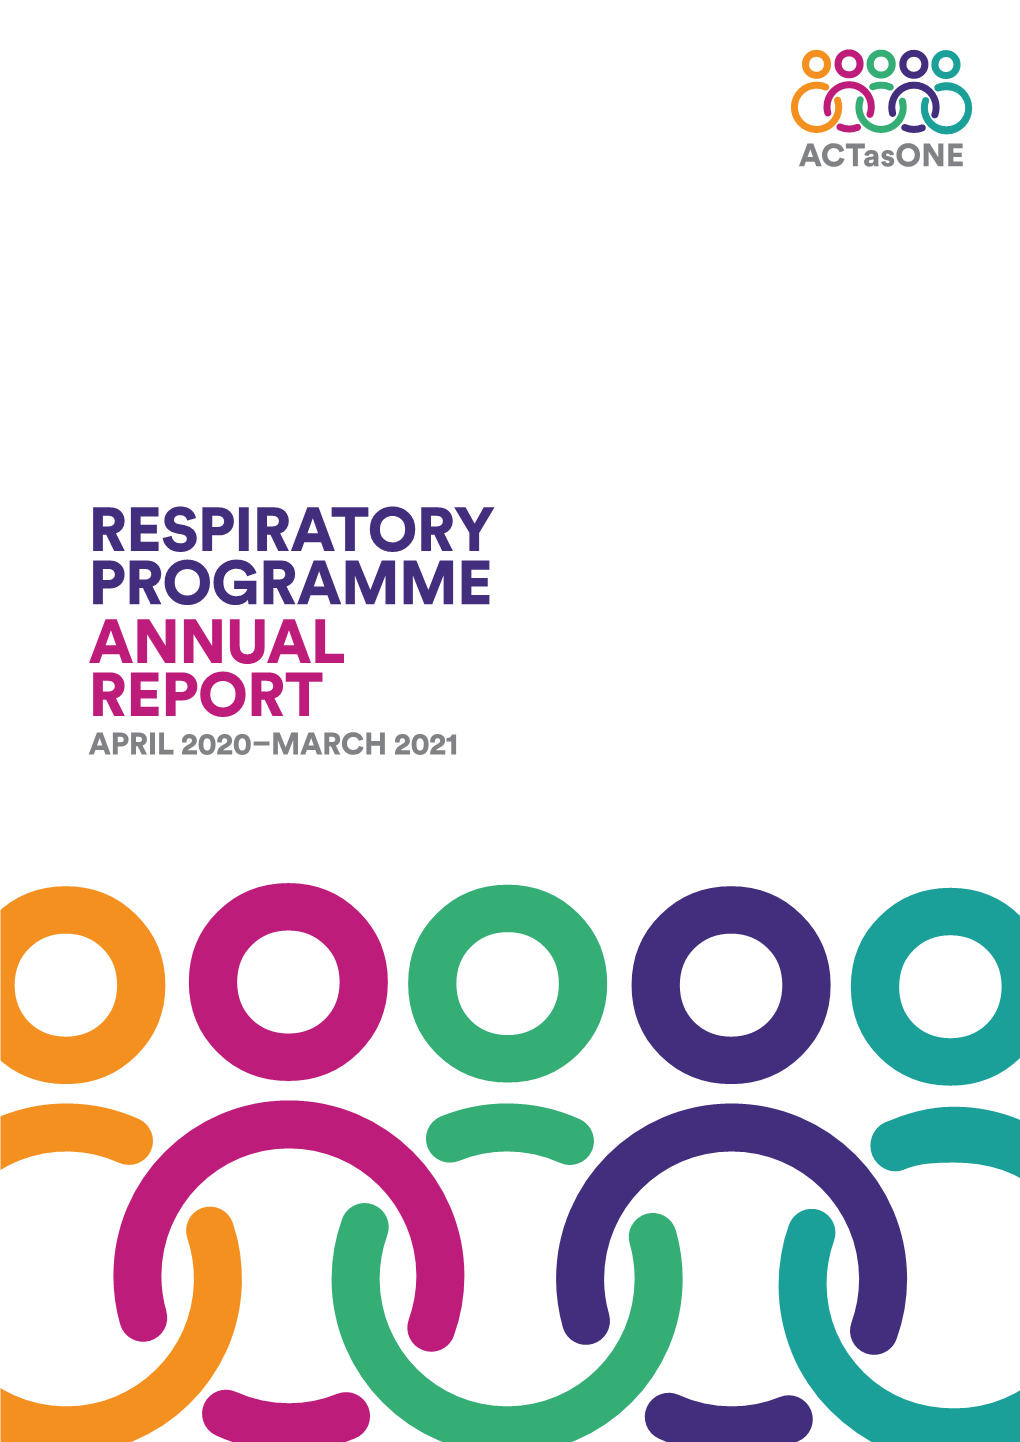 Annual Report Respiratory